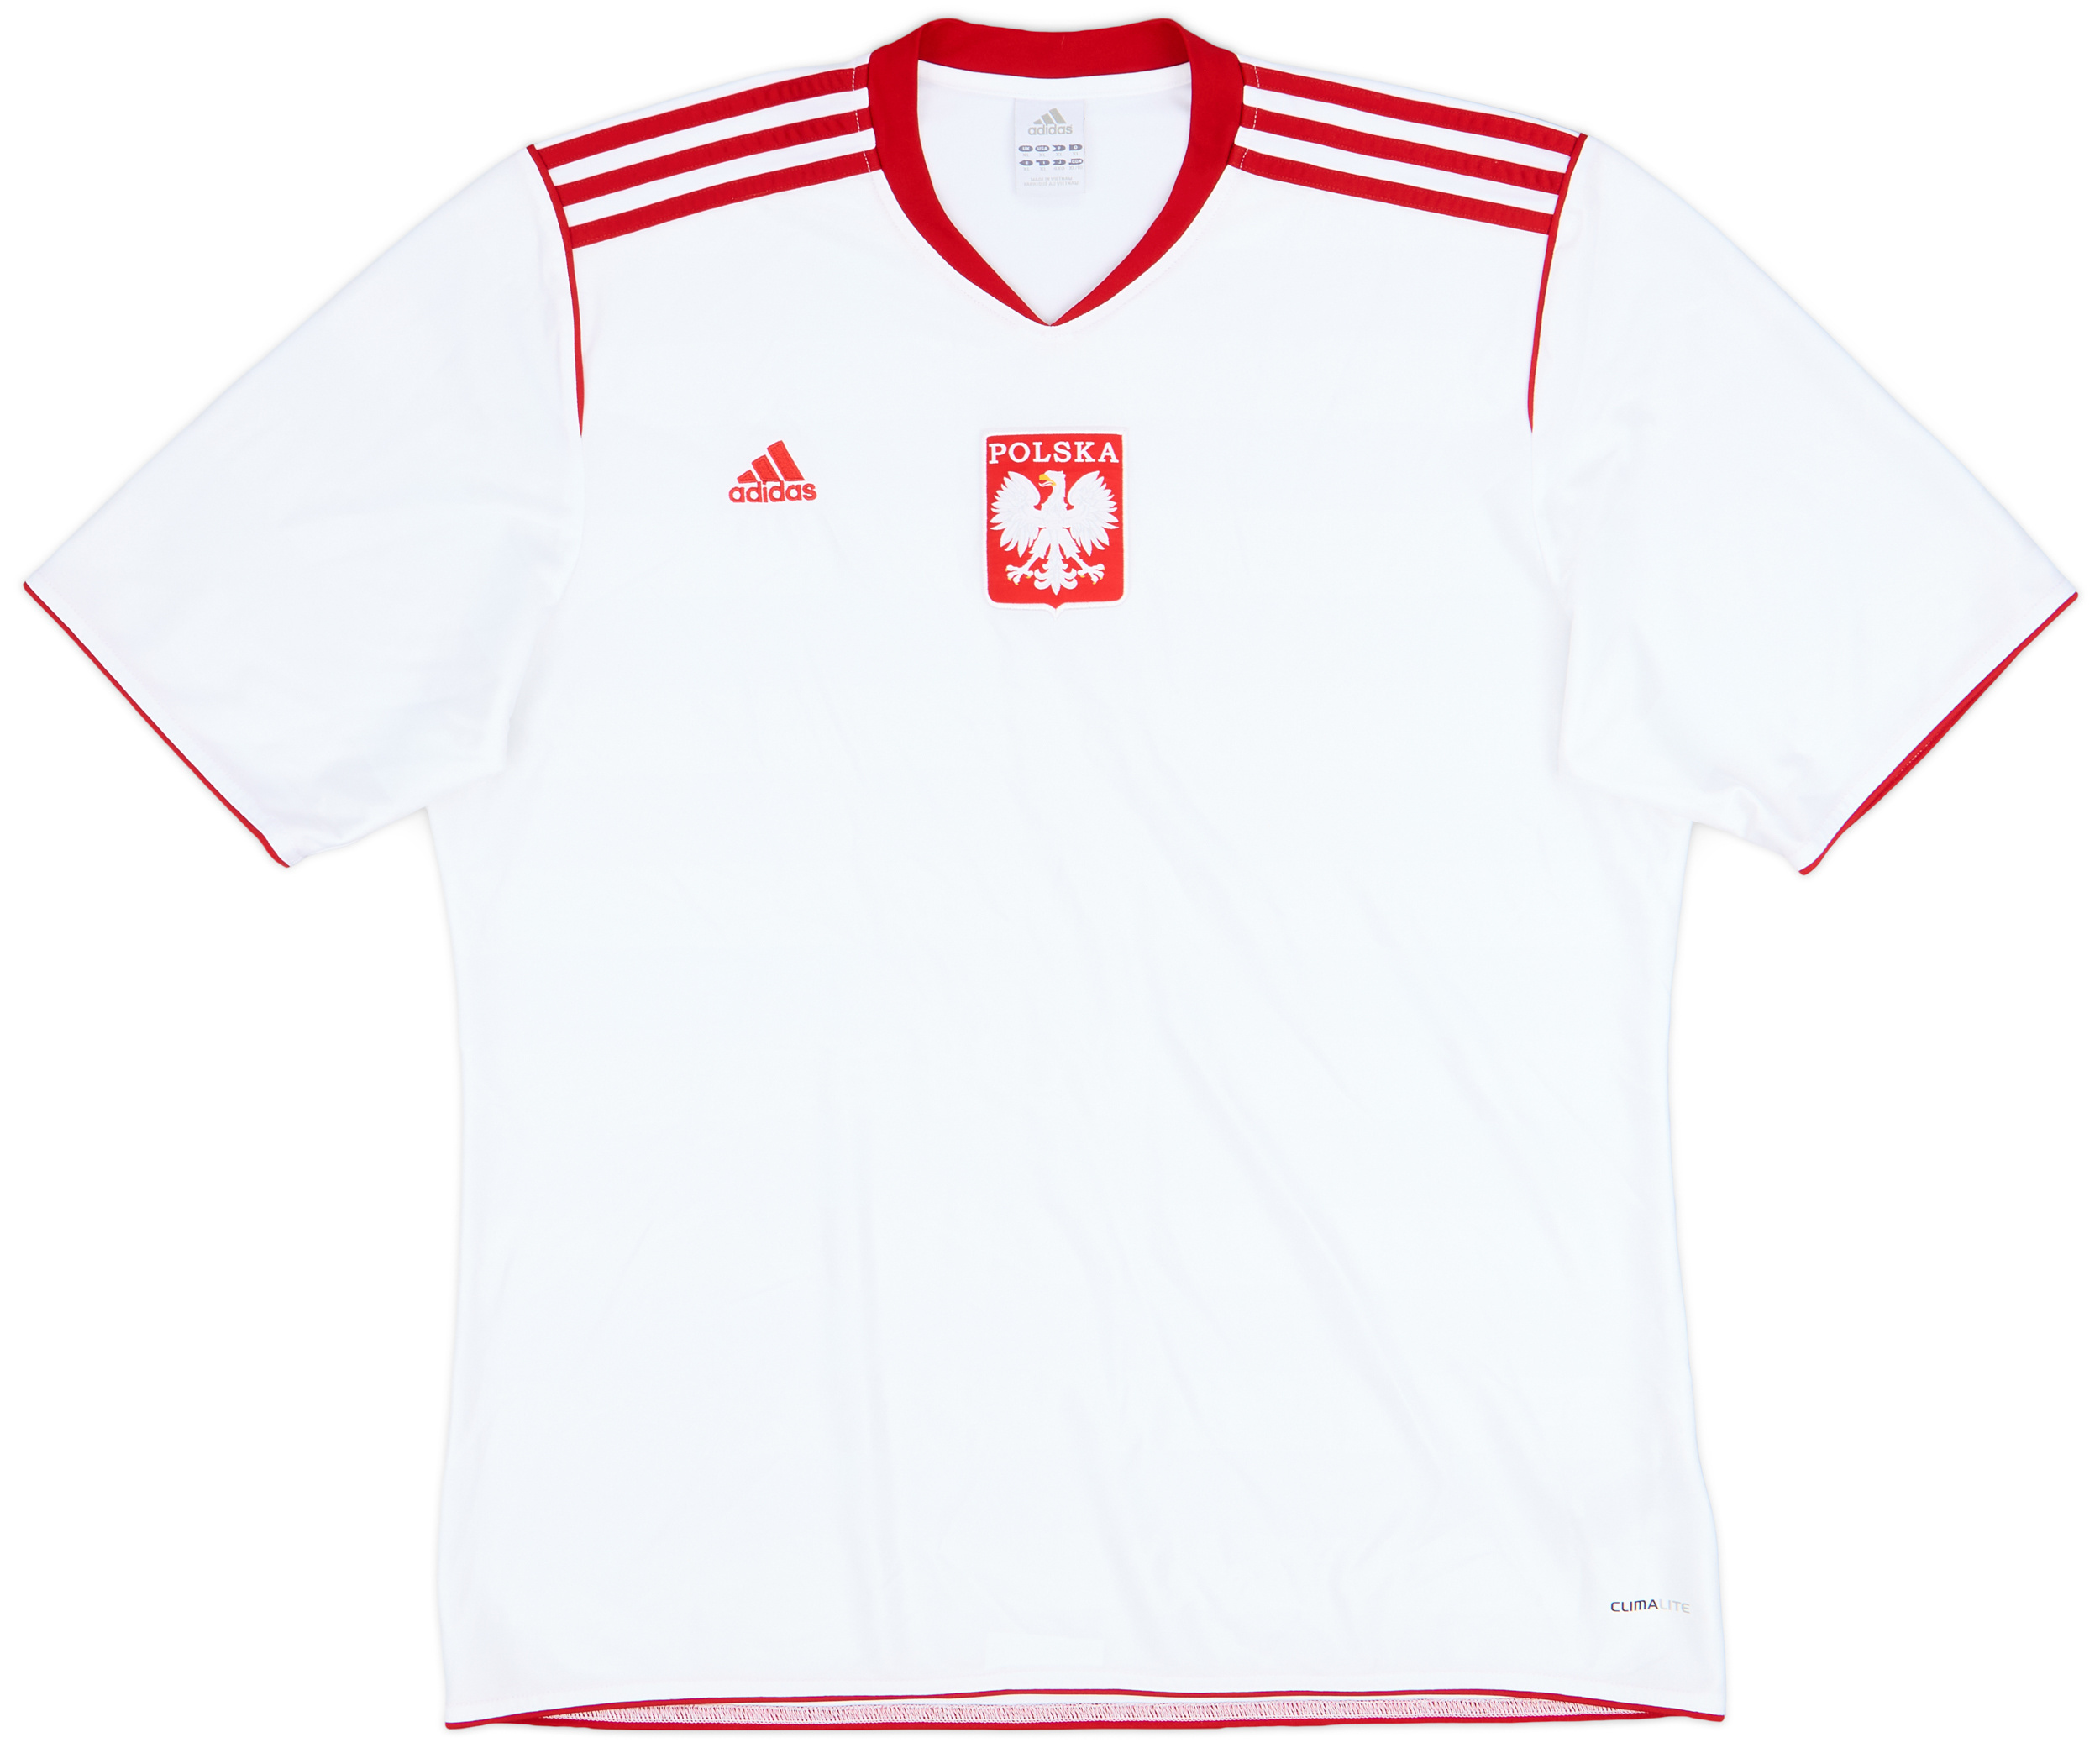 2011 Poland adidas Heritage Shirt - 9/10 - ()